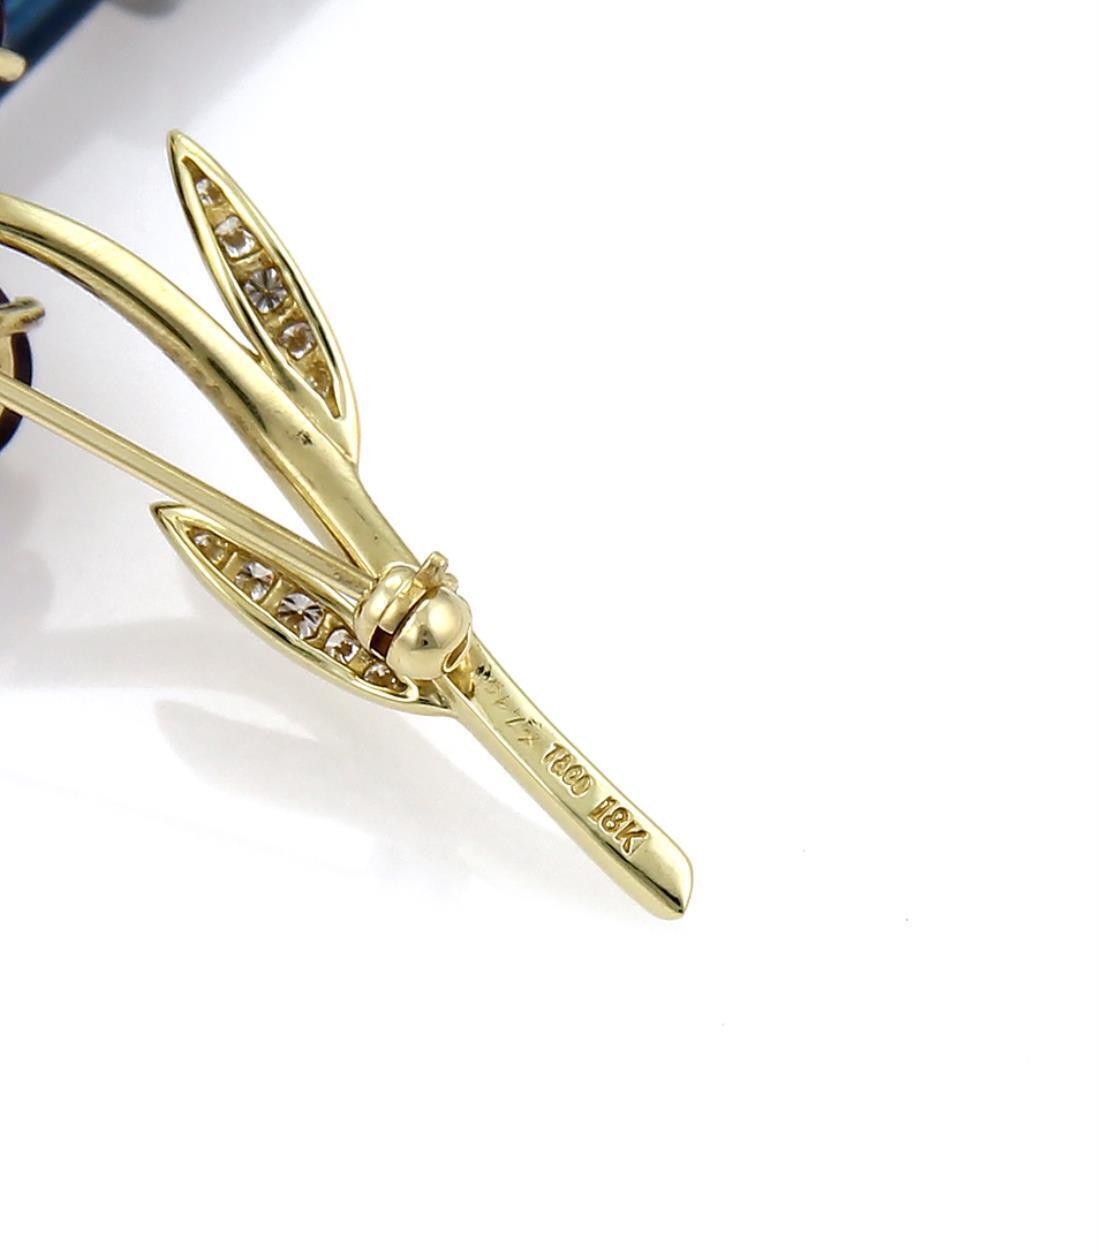 Tiffany & Co. Diamond Amethyst Flower 18k Yellow Gold Pin Brooch